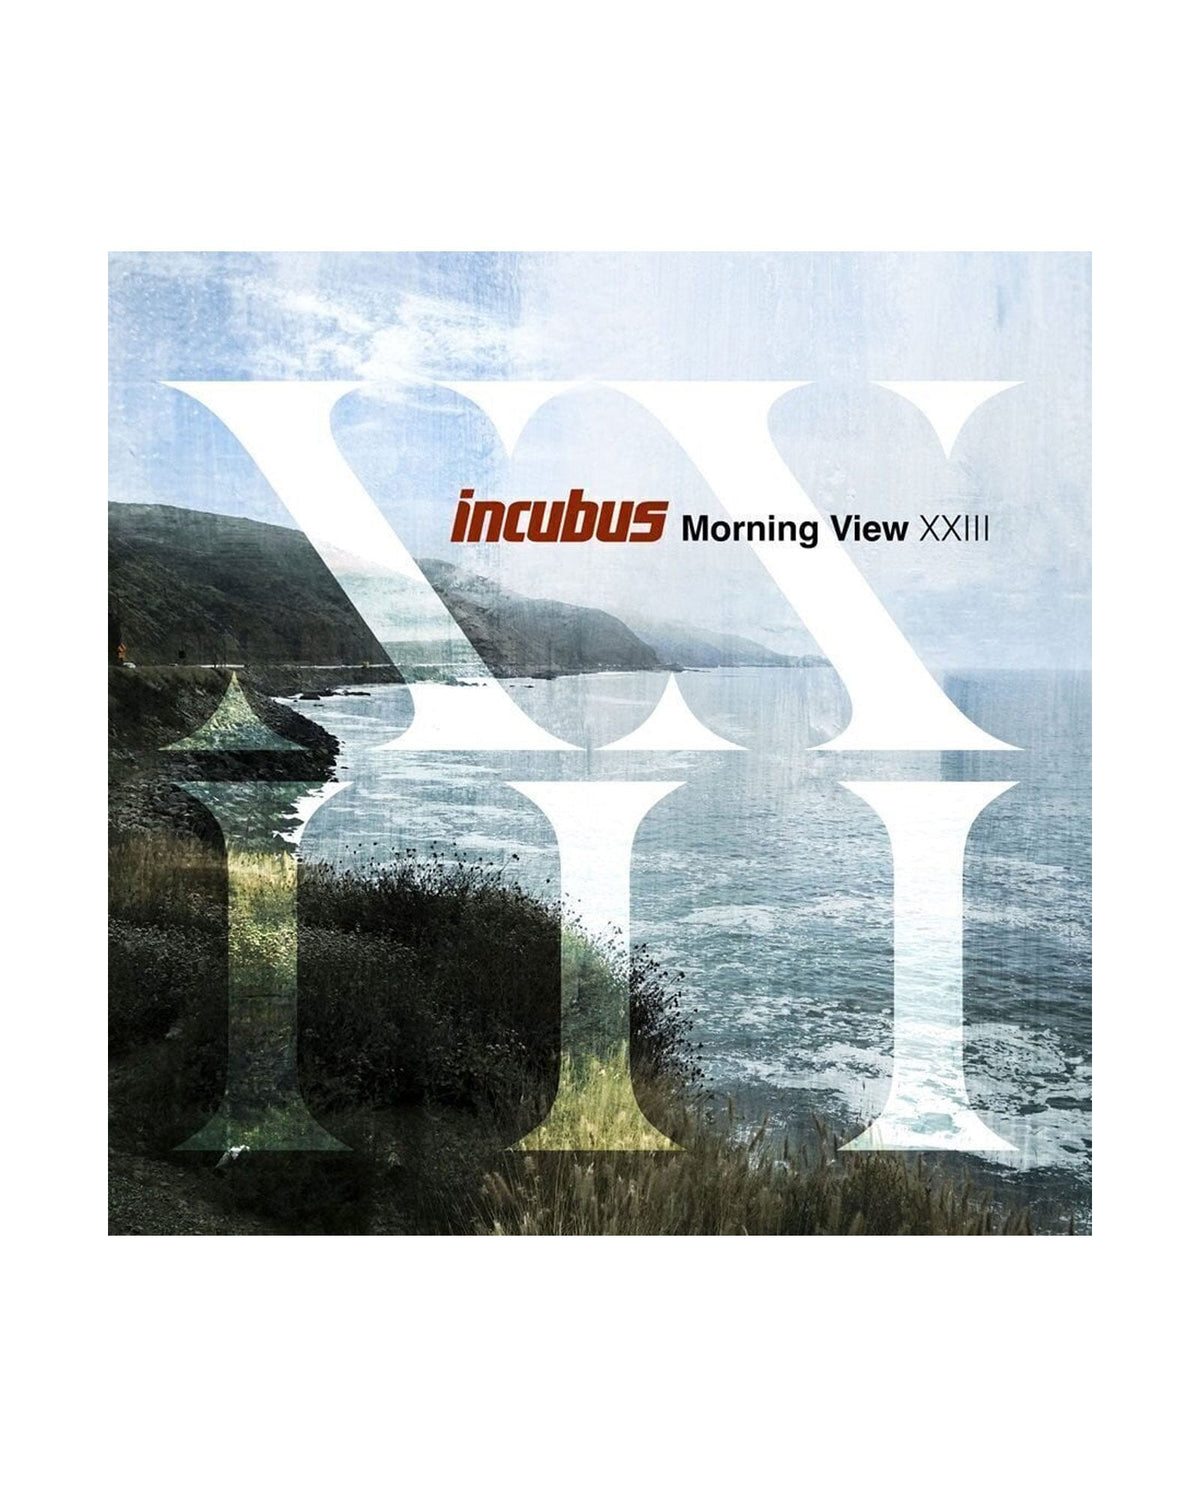 Incubus - LP Vinilo Azul "Morning View XXIII" - D2fy · Rocktud - Rocktud